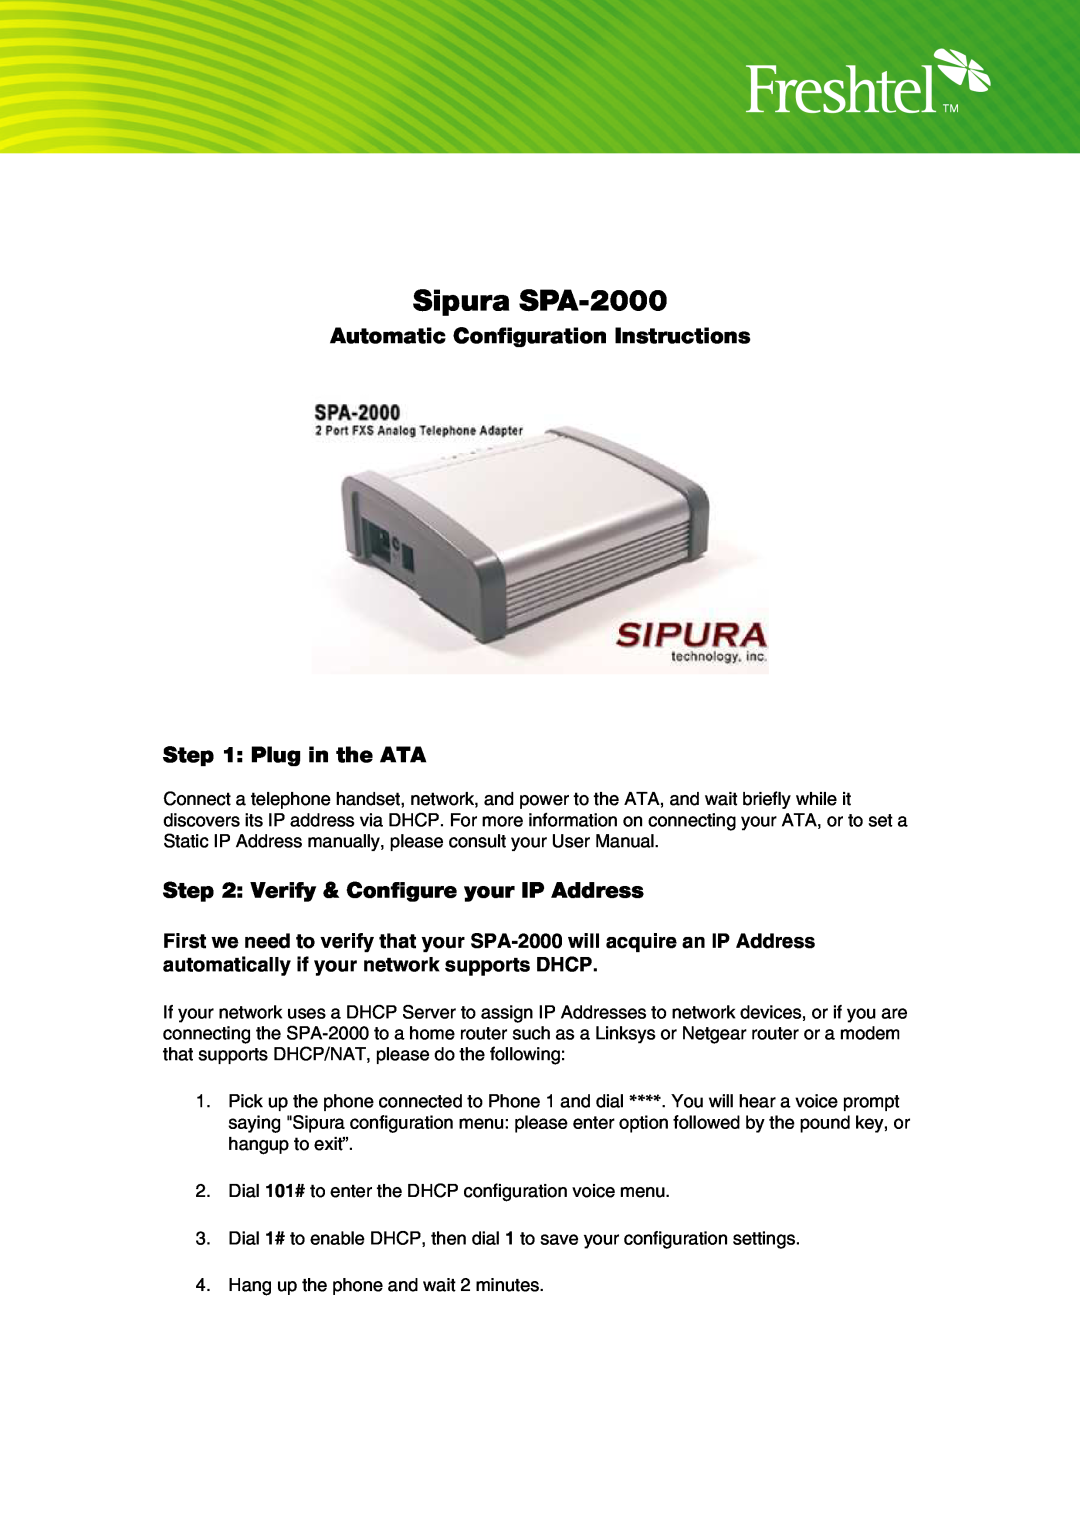 Freshtel SPA-2000 manual Automatic Configuration Instructions Plug in the ATA, Verify & Configure your IP Address 